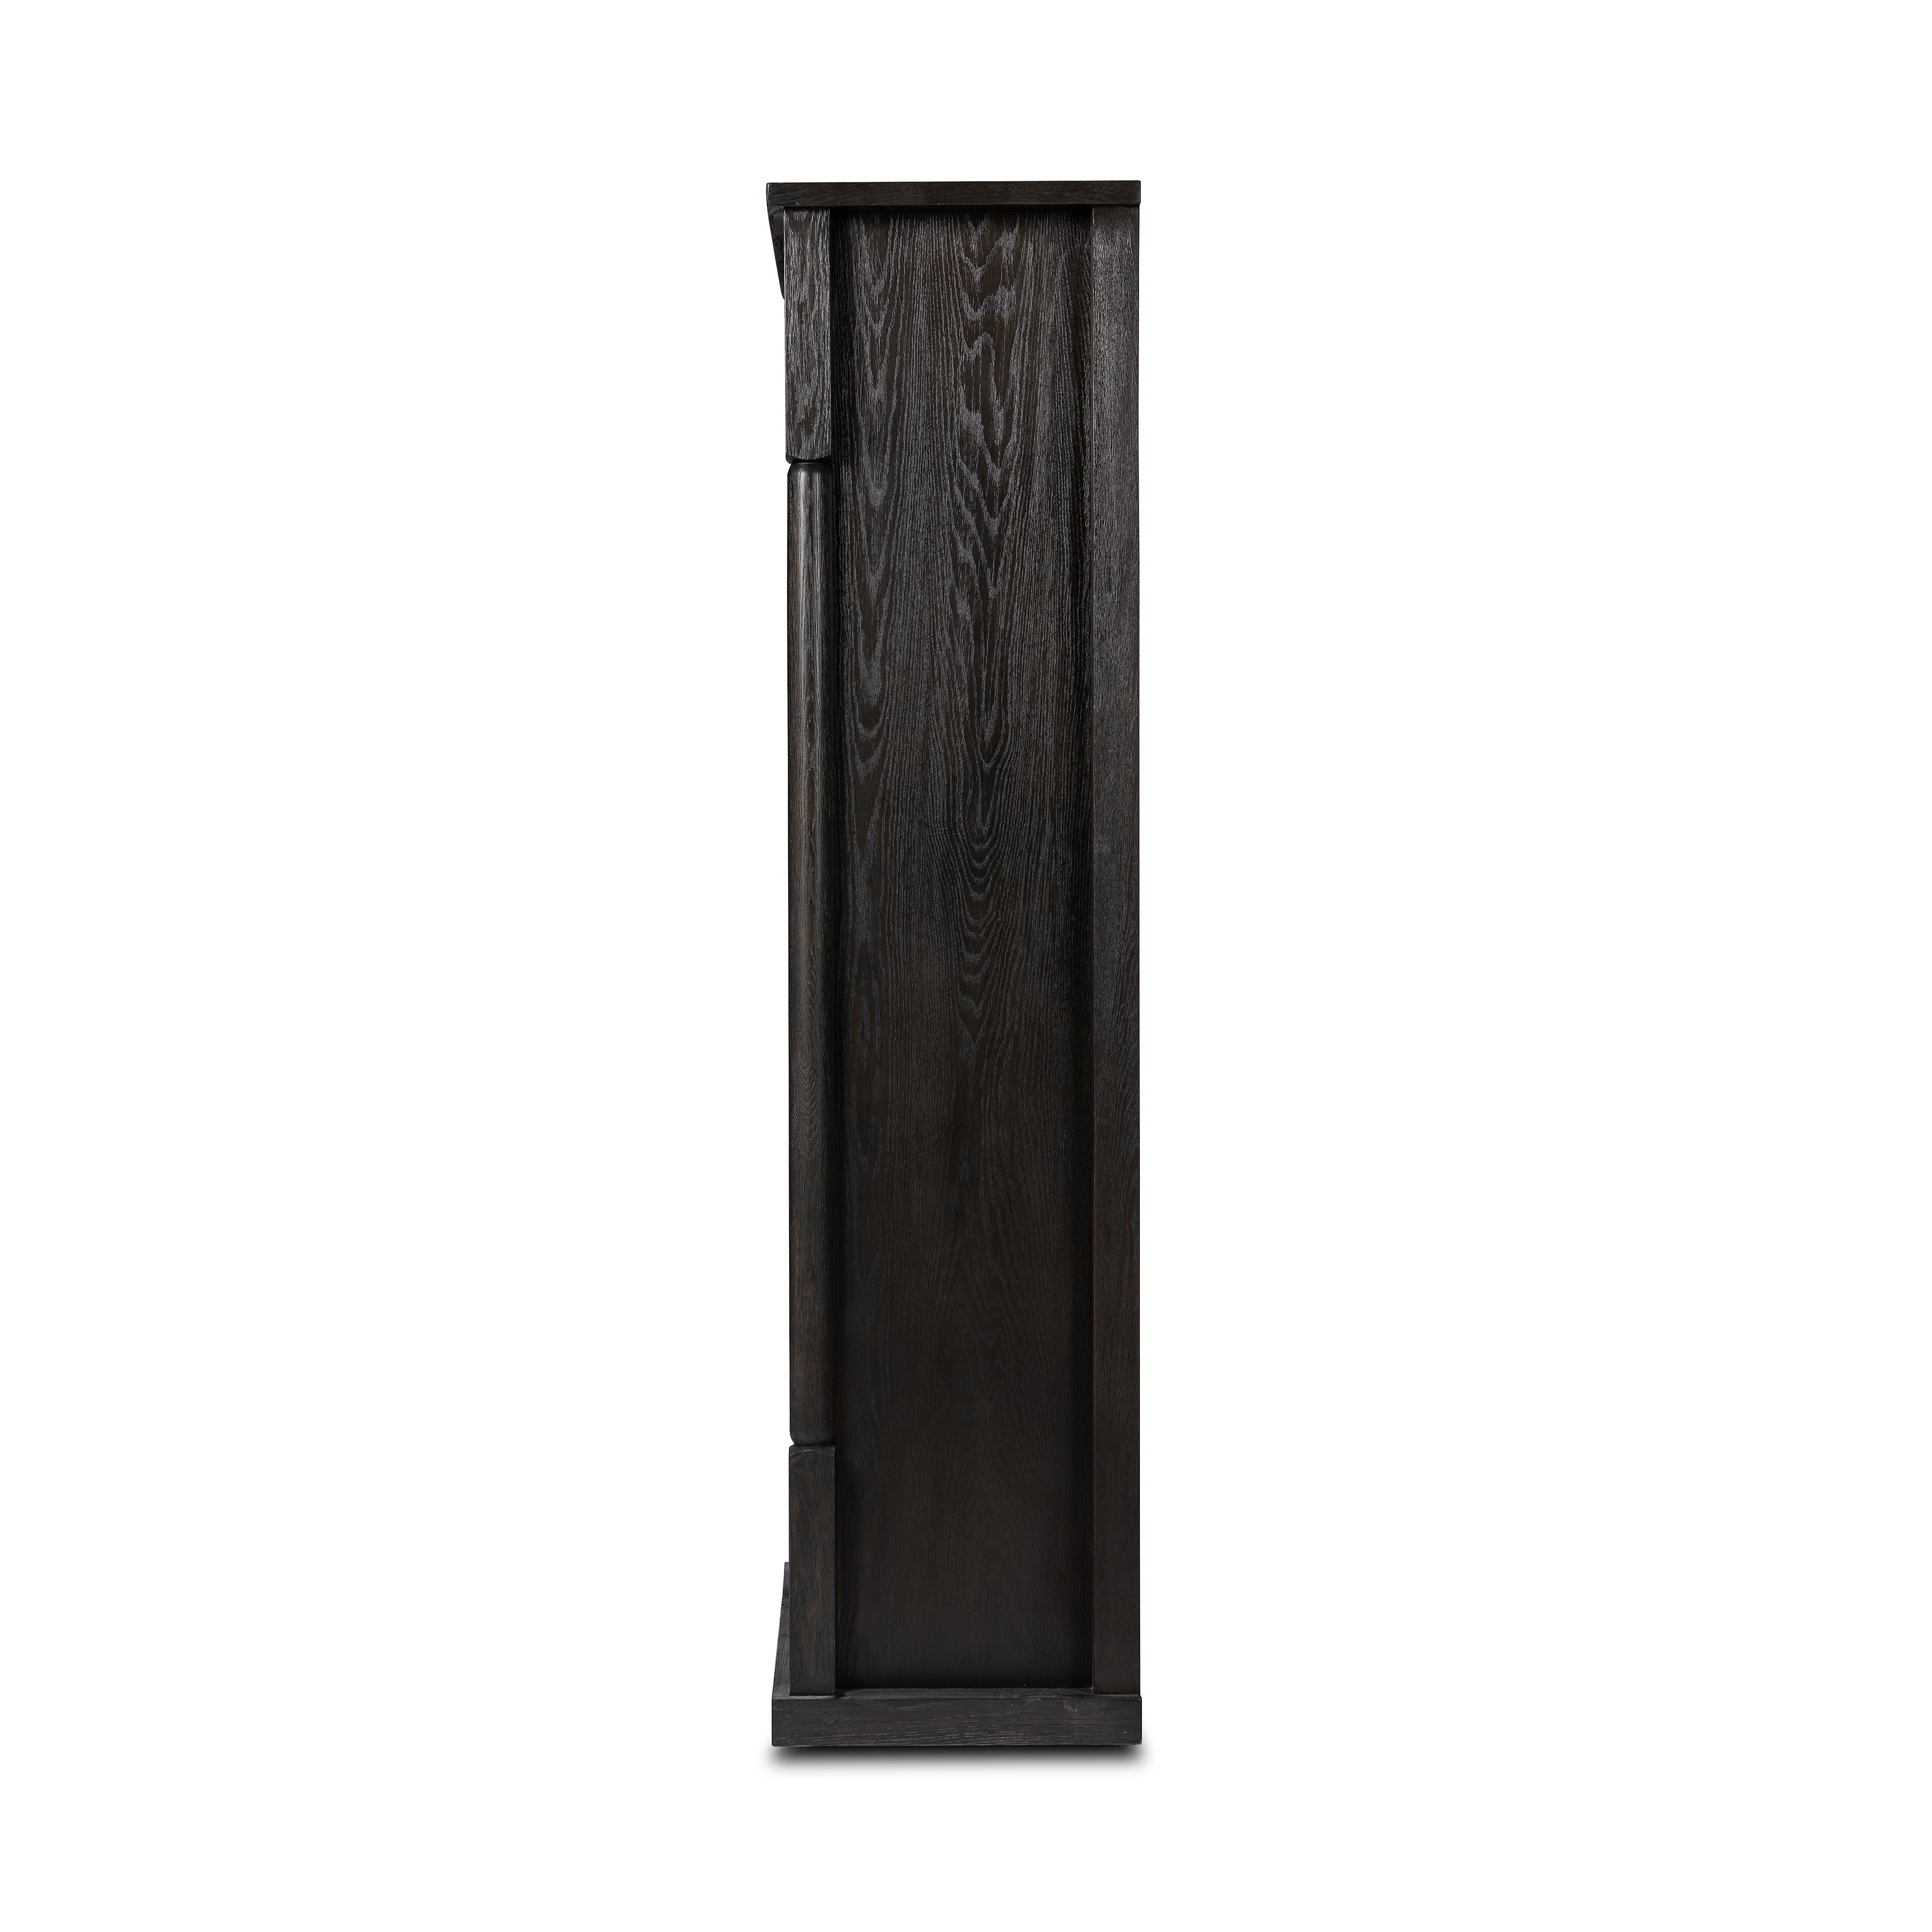 Concord Cabinet-Charcoal Oak Veneer - Image 6